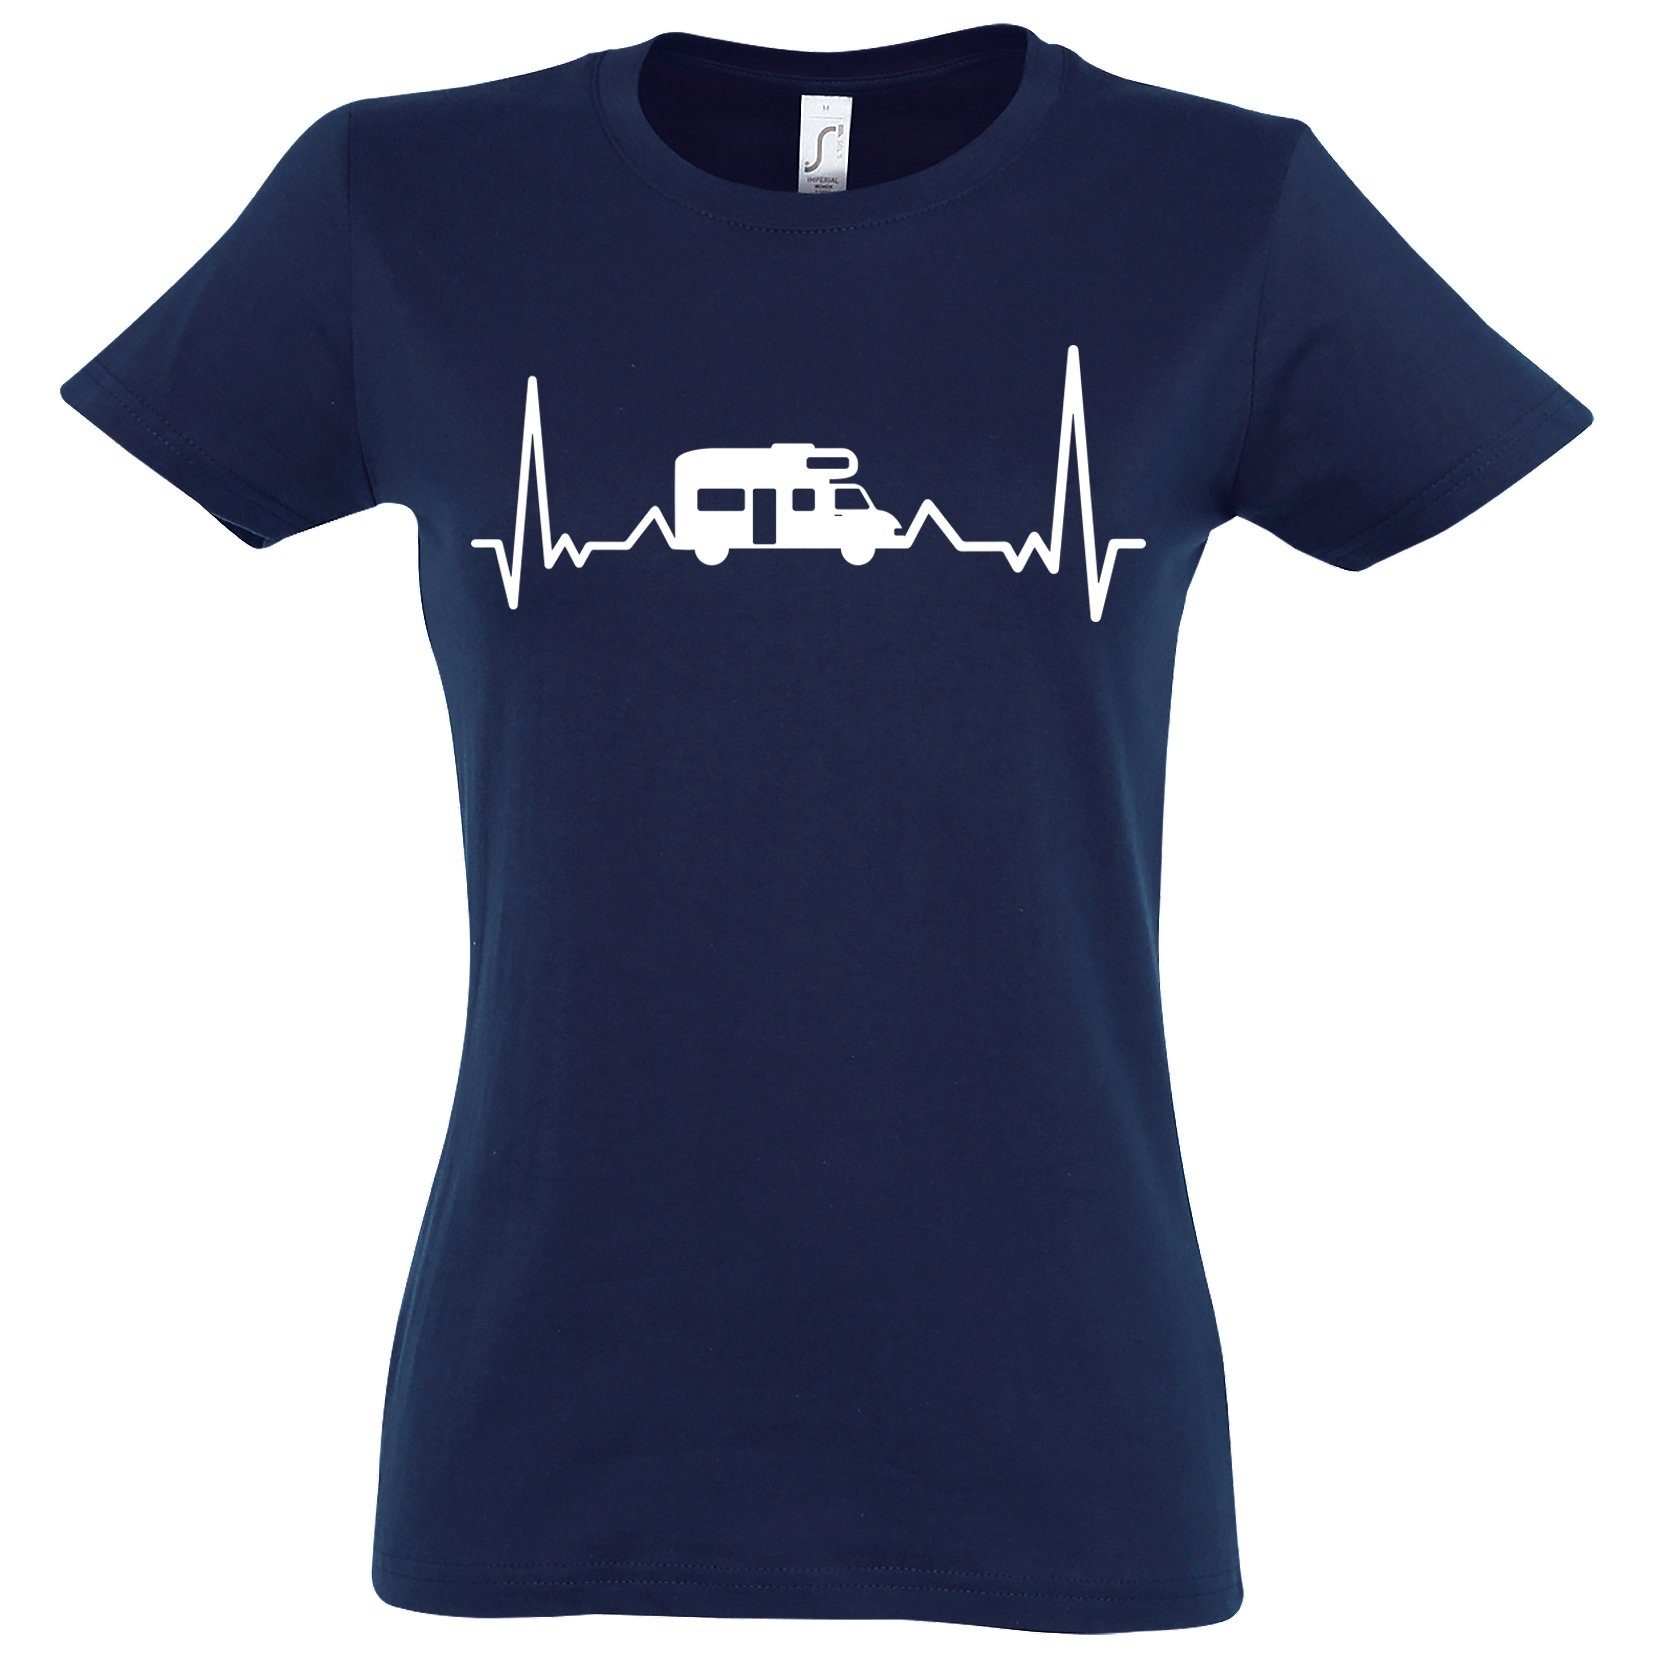 Designz Navyblau lustigem Camping Frontprint mit Damen Youth Shirt T-Shirt Herzschlag Capming